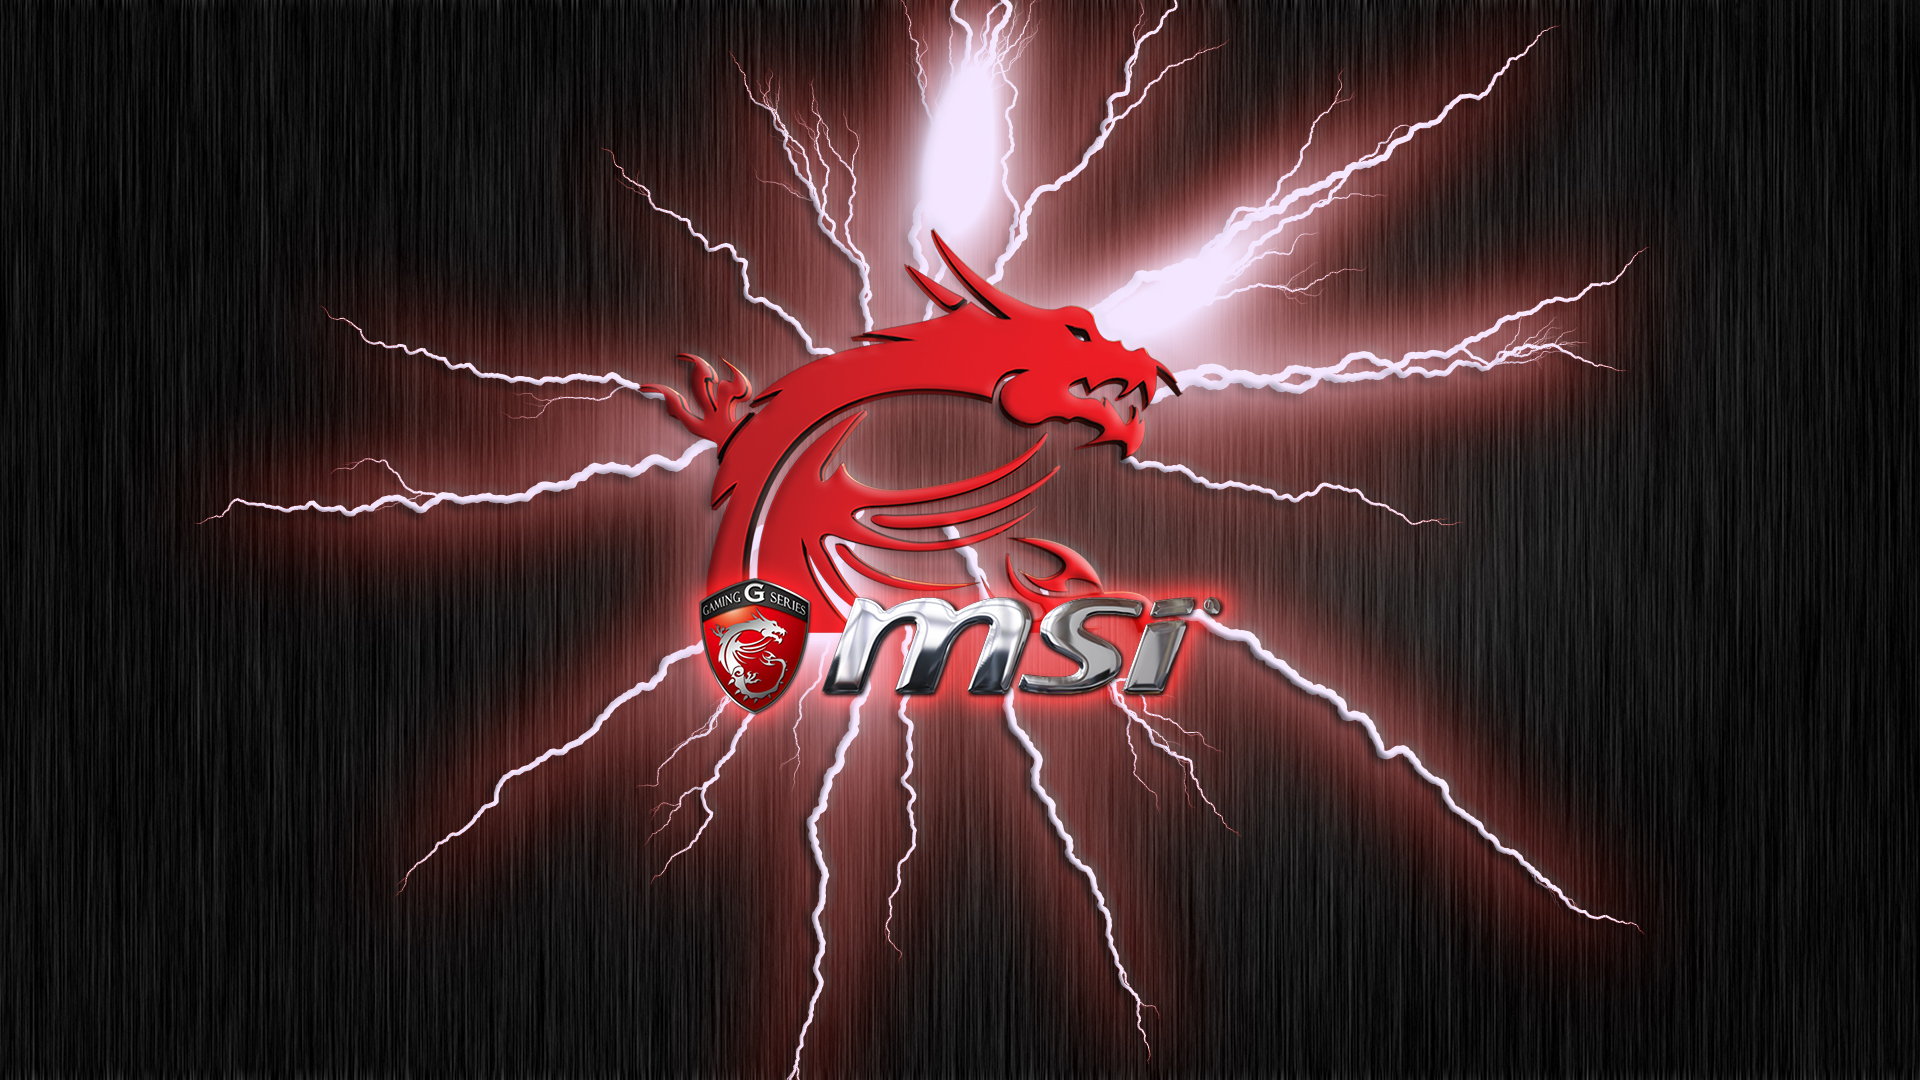 Featured image of post Msi Gaming Wallpaper 1920X1080 / 1920x1080 download msi gaming g series dragon logo background wallpaper.